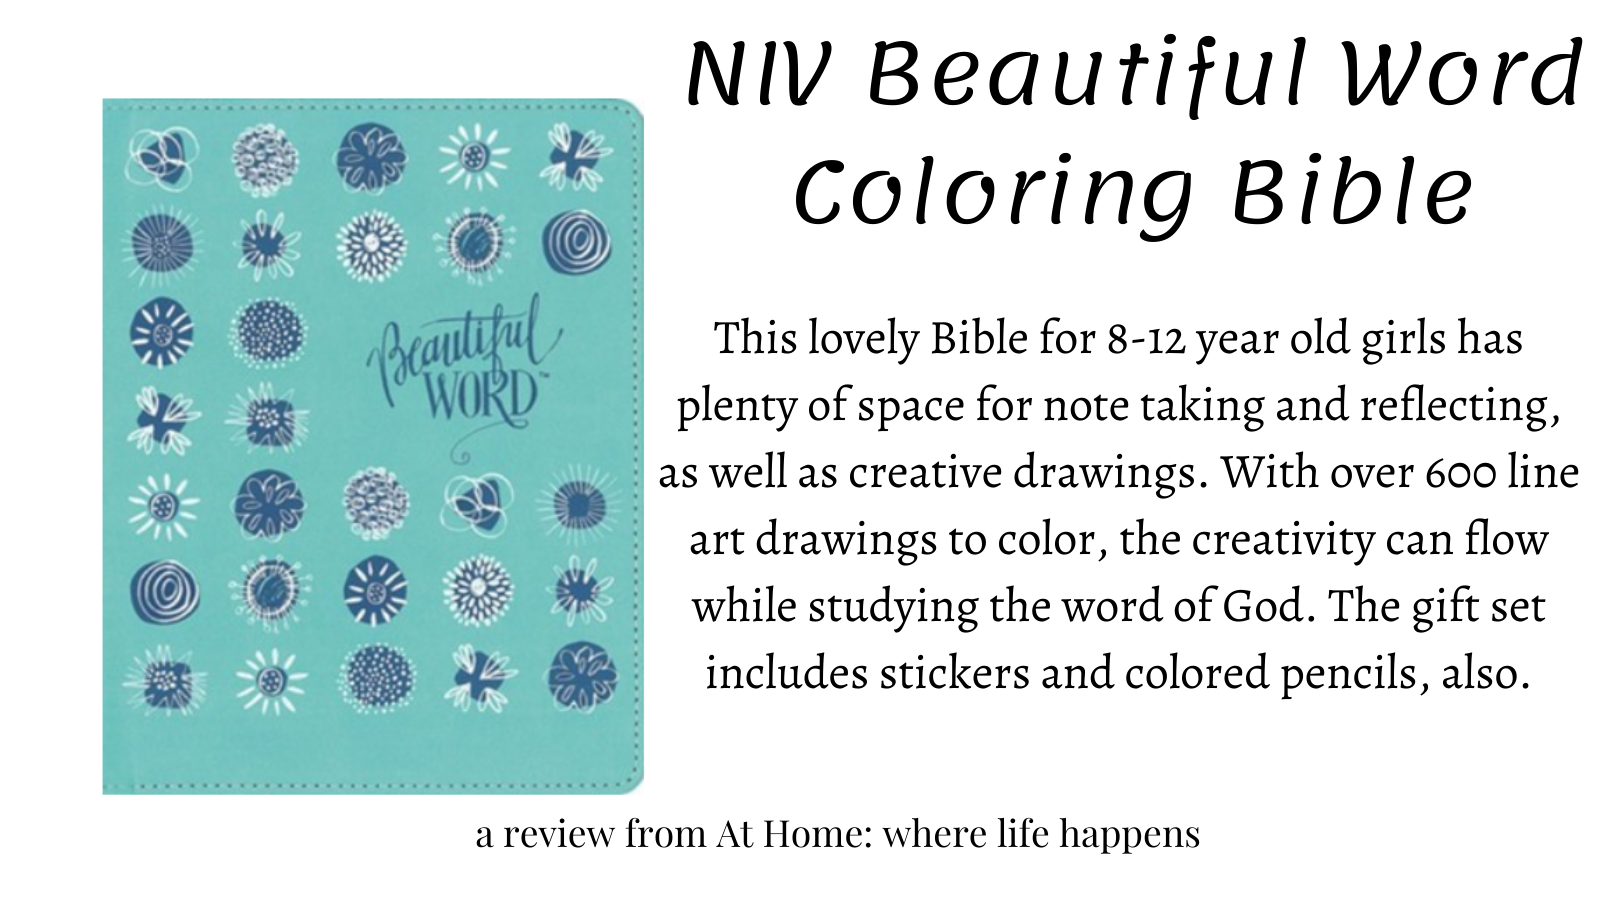 https://3gigglygirlsathome.files.wordpress.com/2020/11/niv-beautiful-word-coloring-bible.png